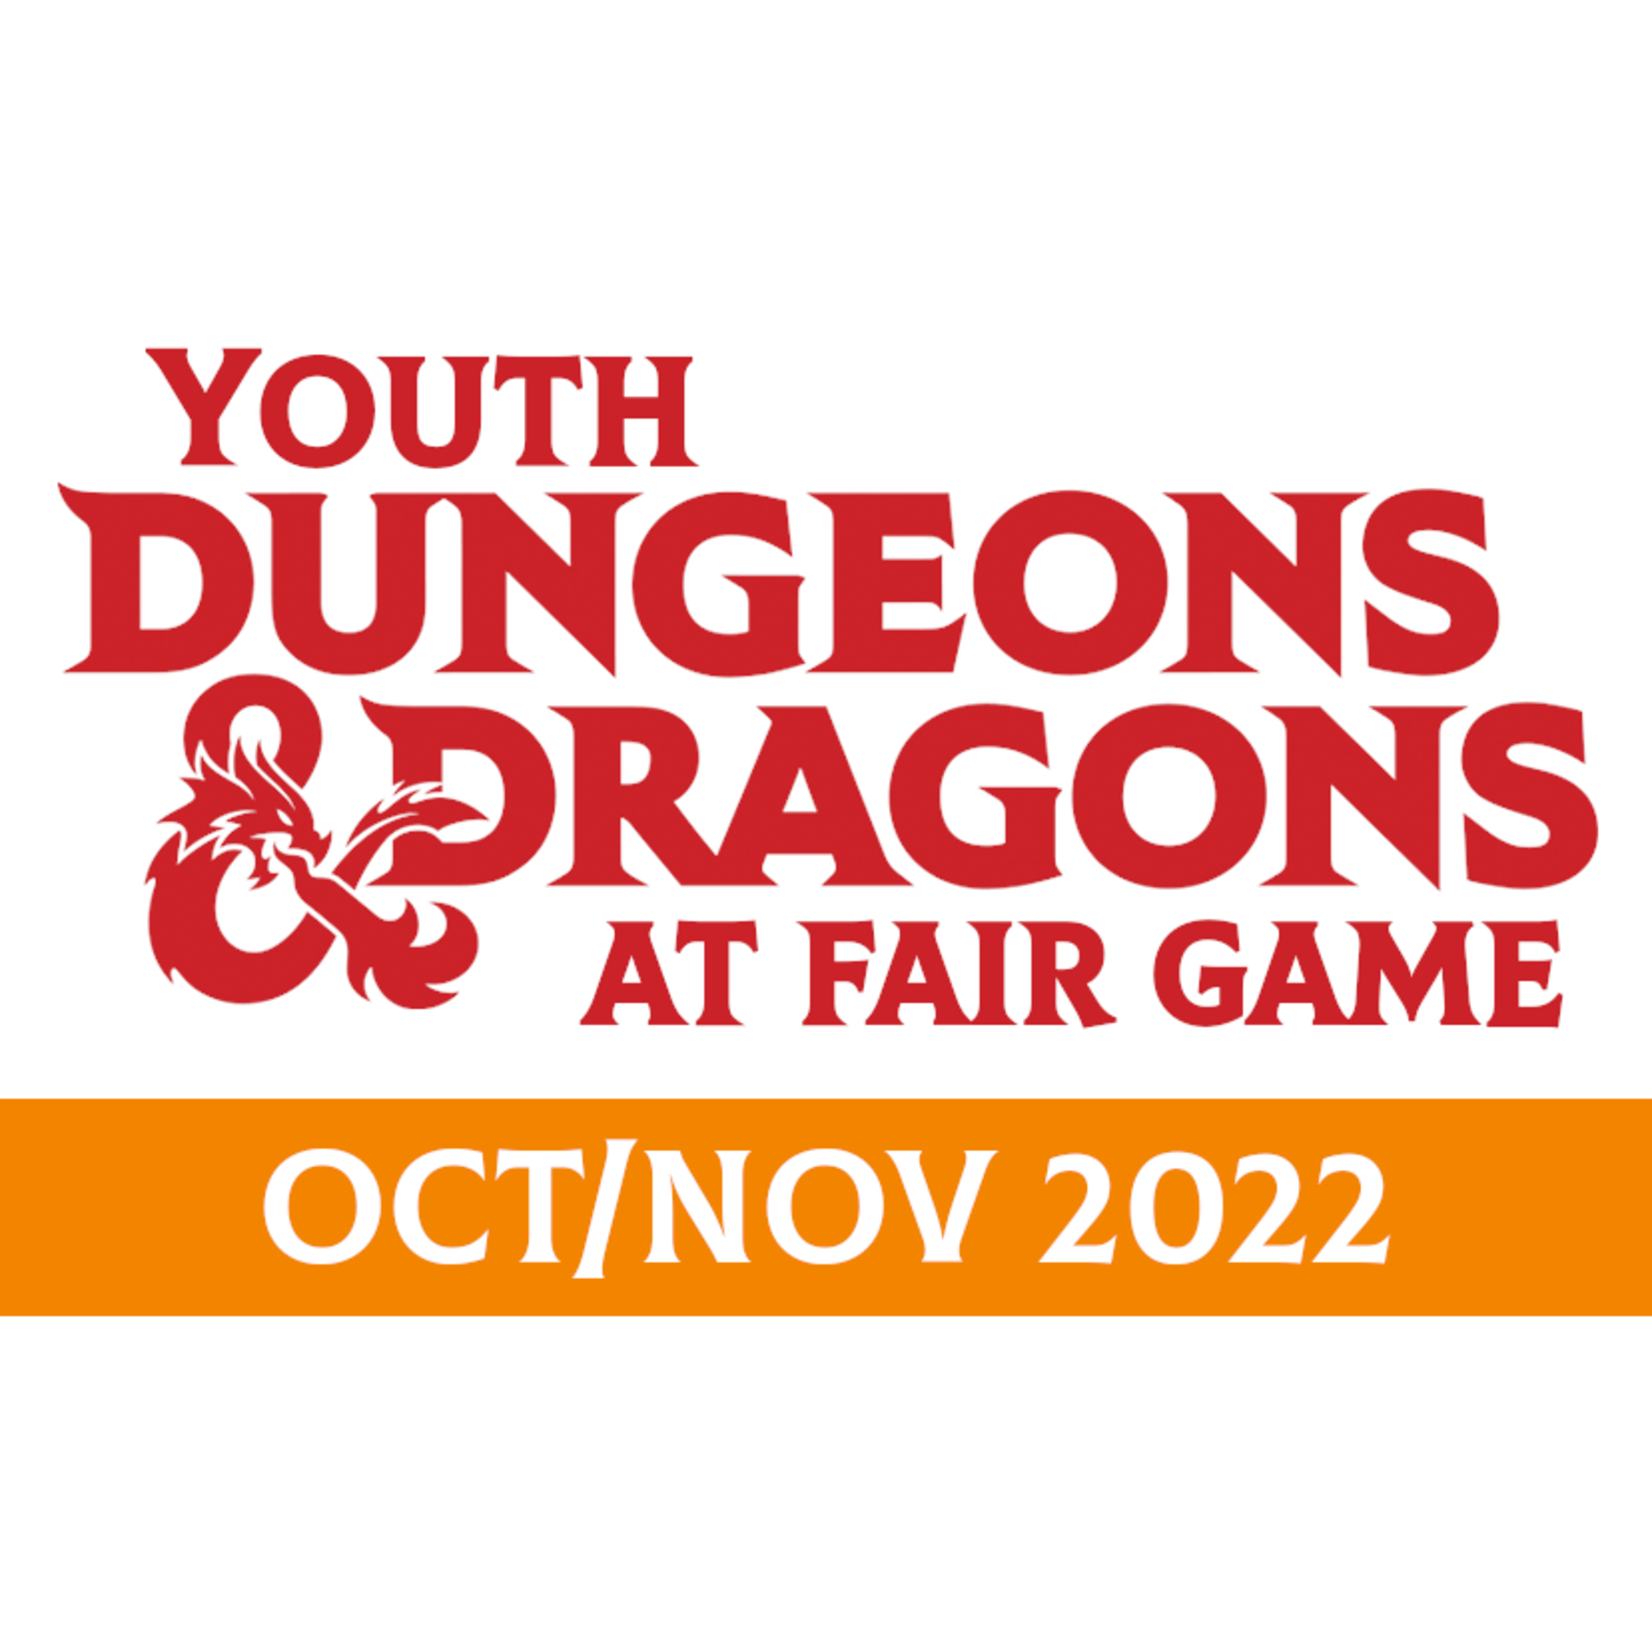 Fair Game YDND Oct/Nov 2022: Group VA2 - Monday Virtual 4-6 PM (Ages 8-13)